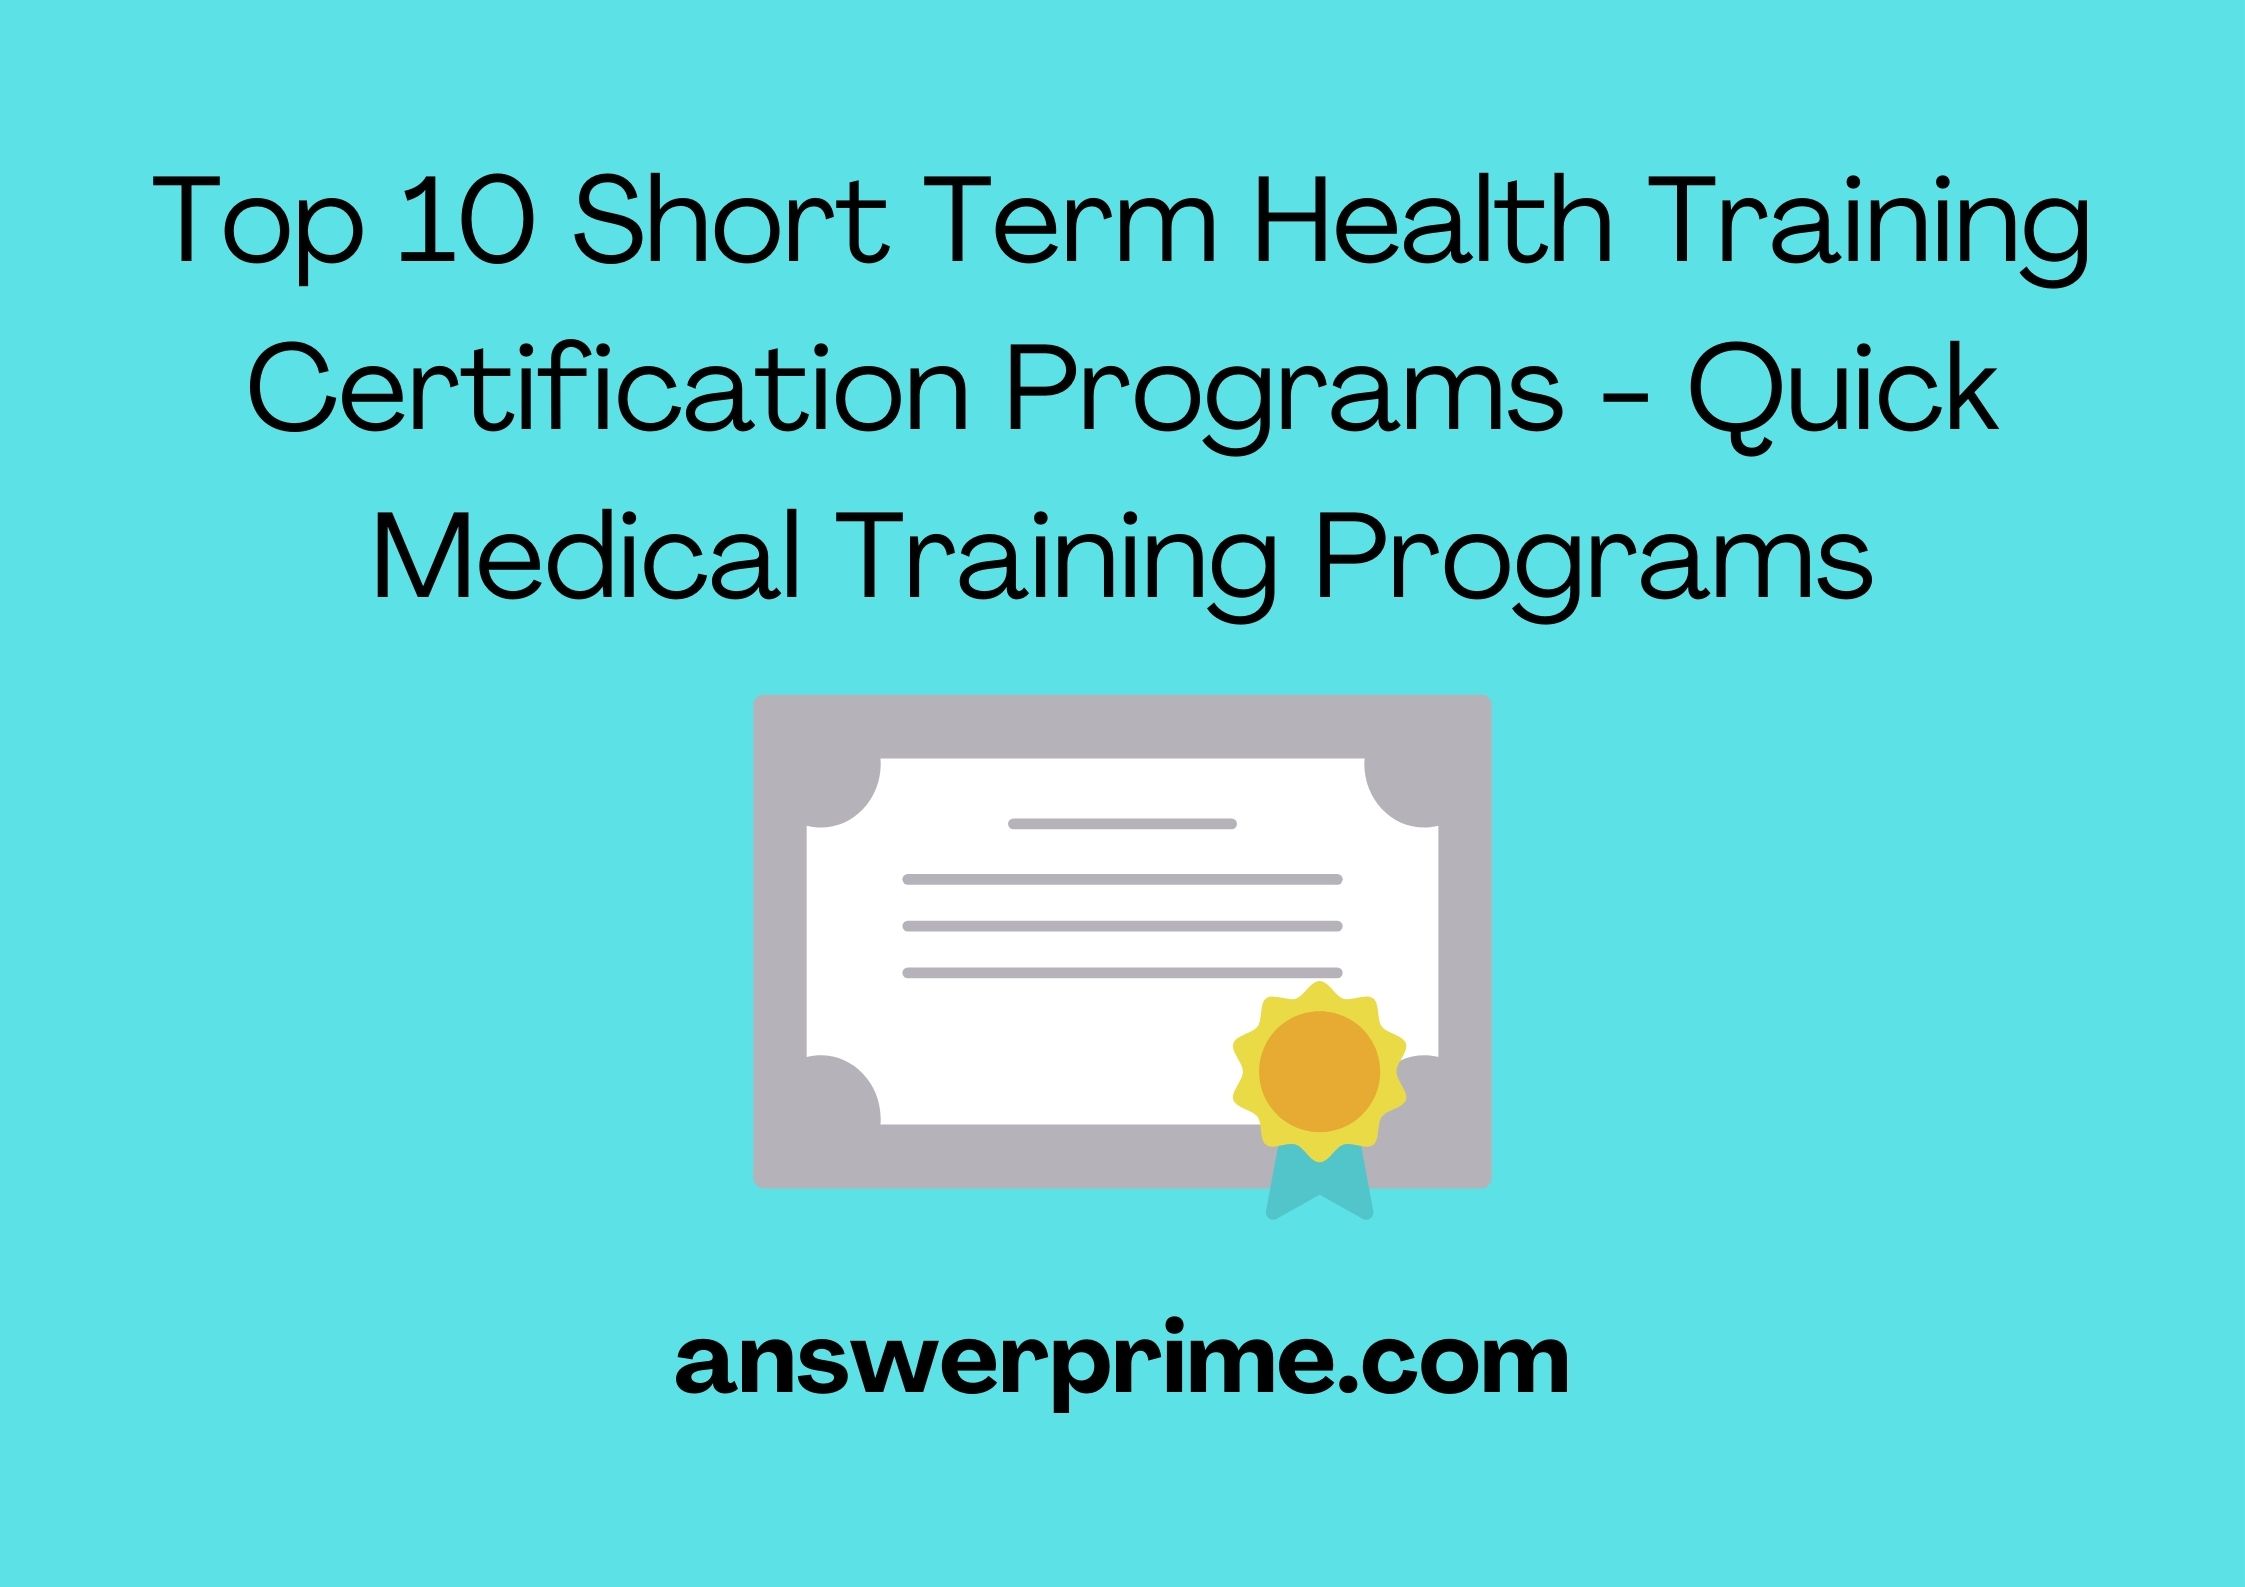 Top 10 Short Term Health Training Certification Programs - Quick Medical Training Programs